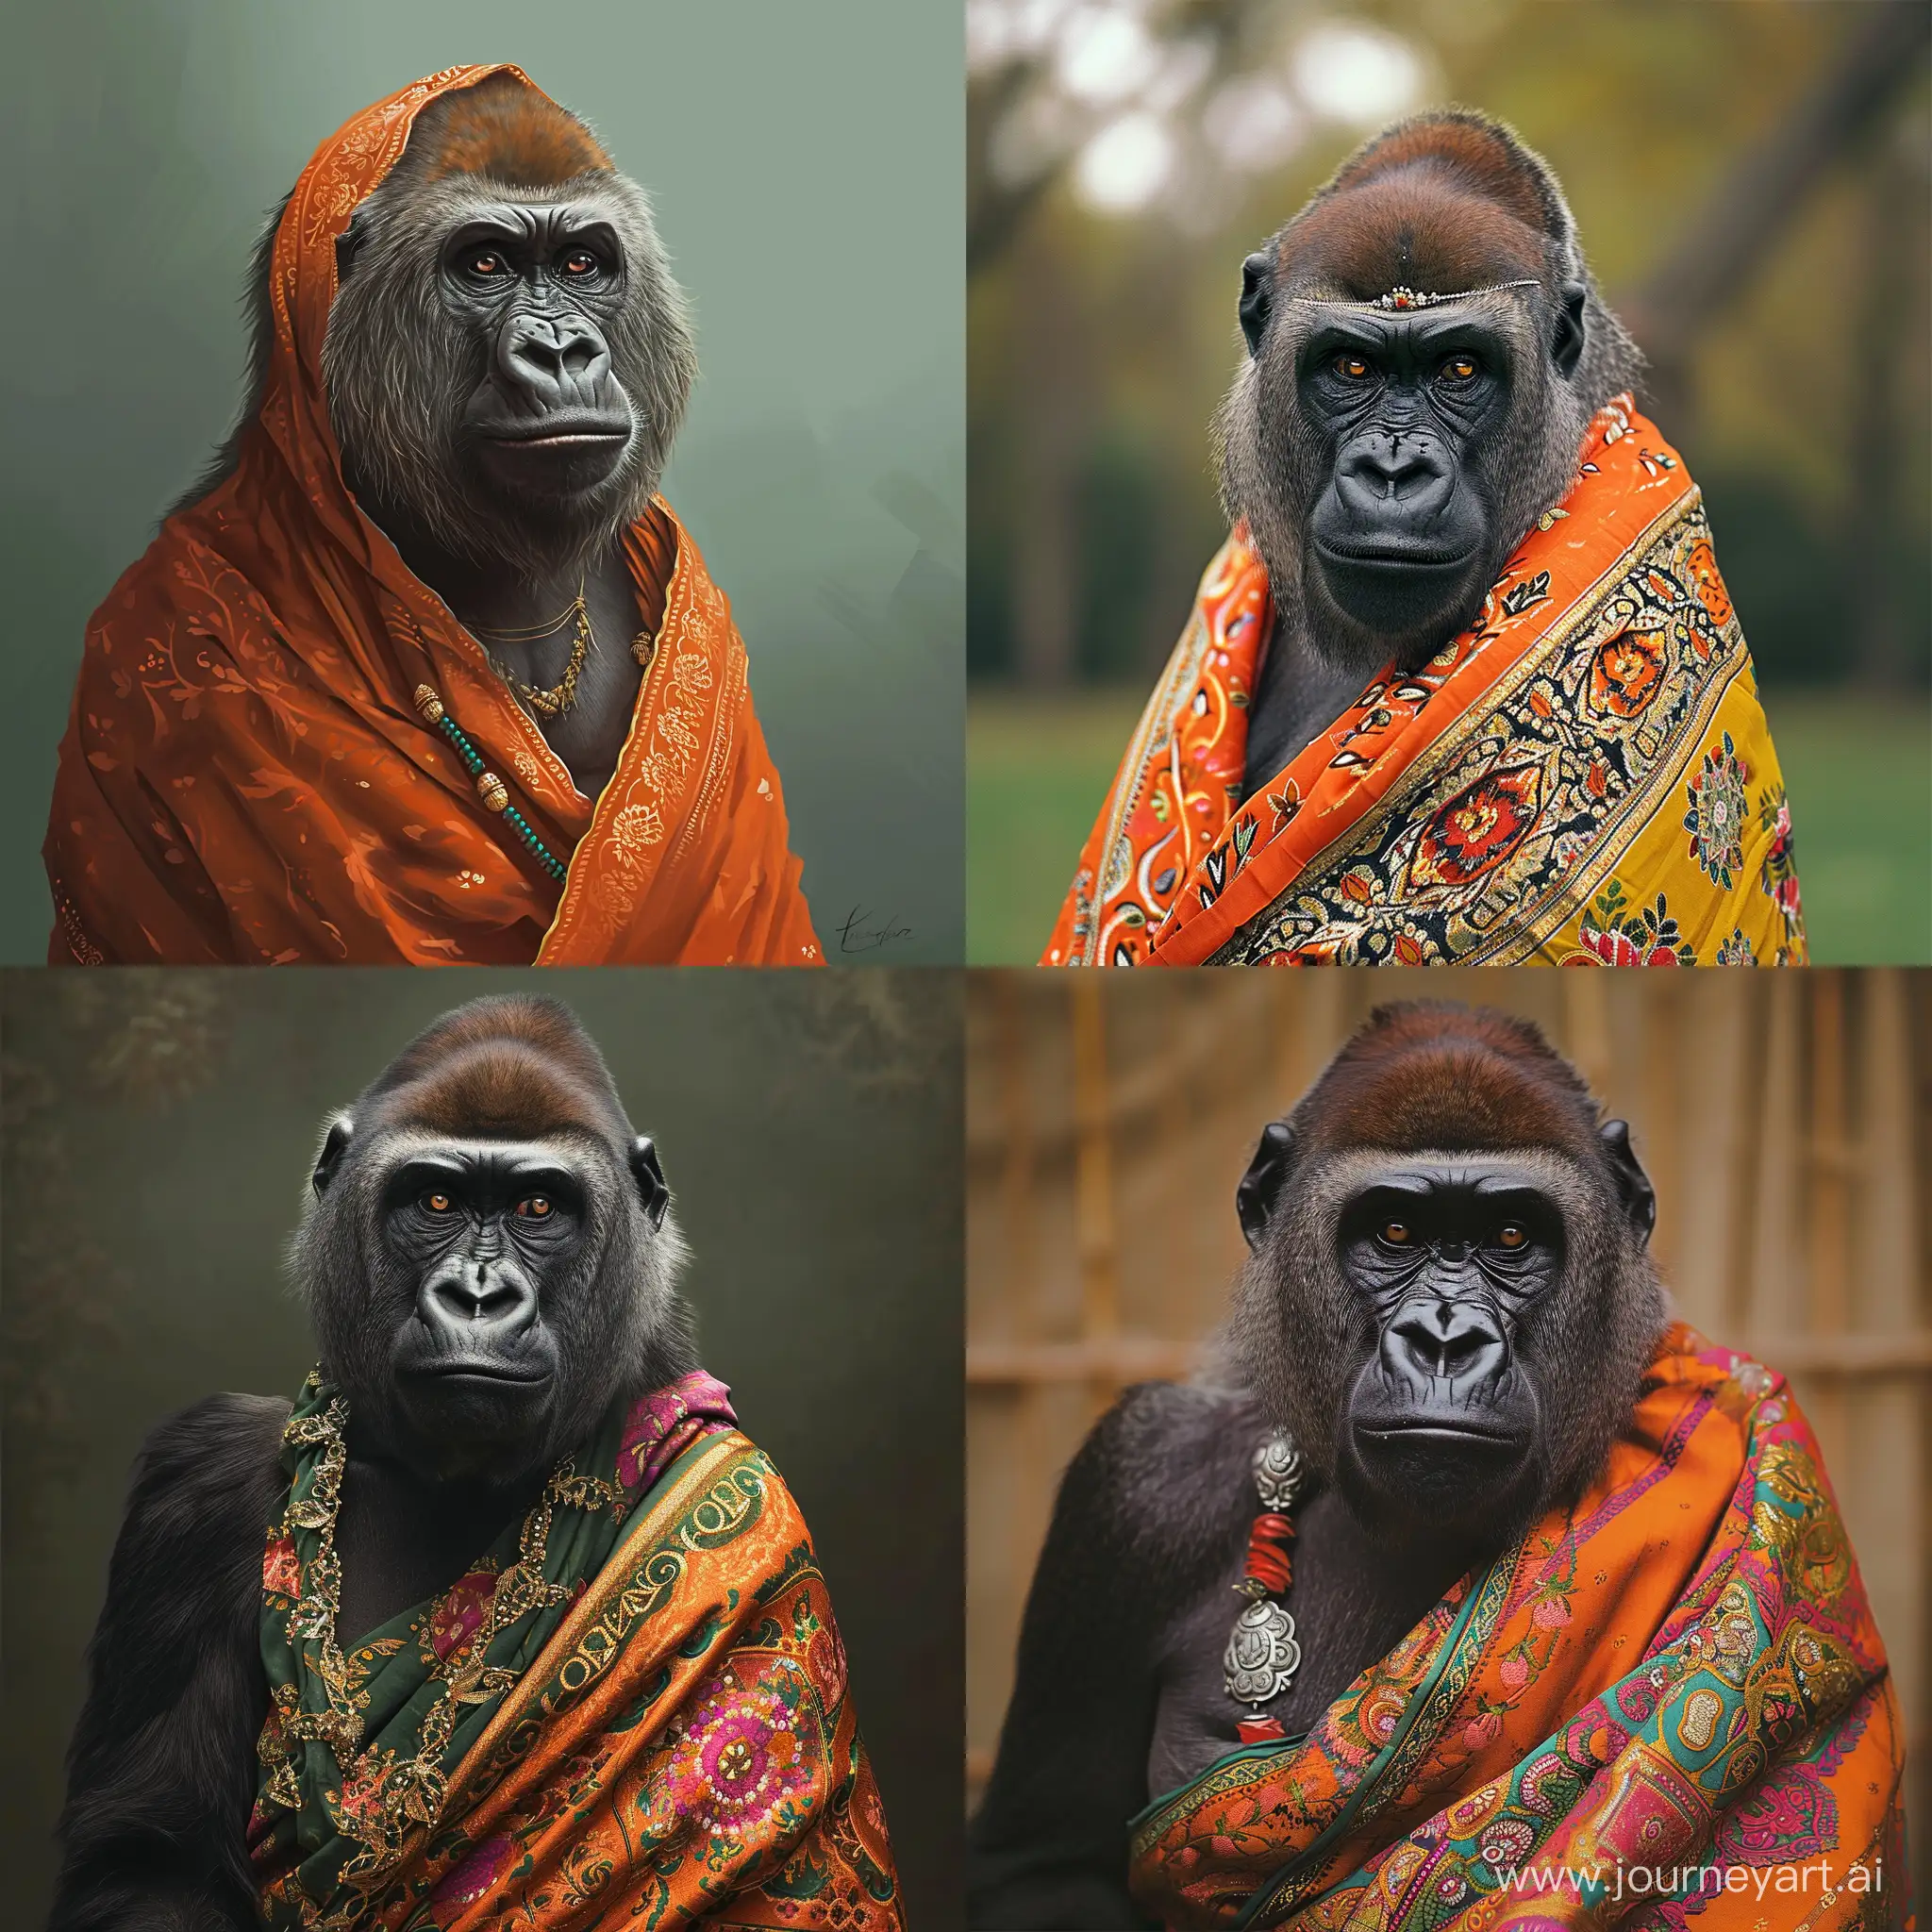 Gorilla wearing a sari